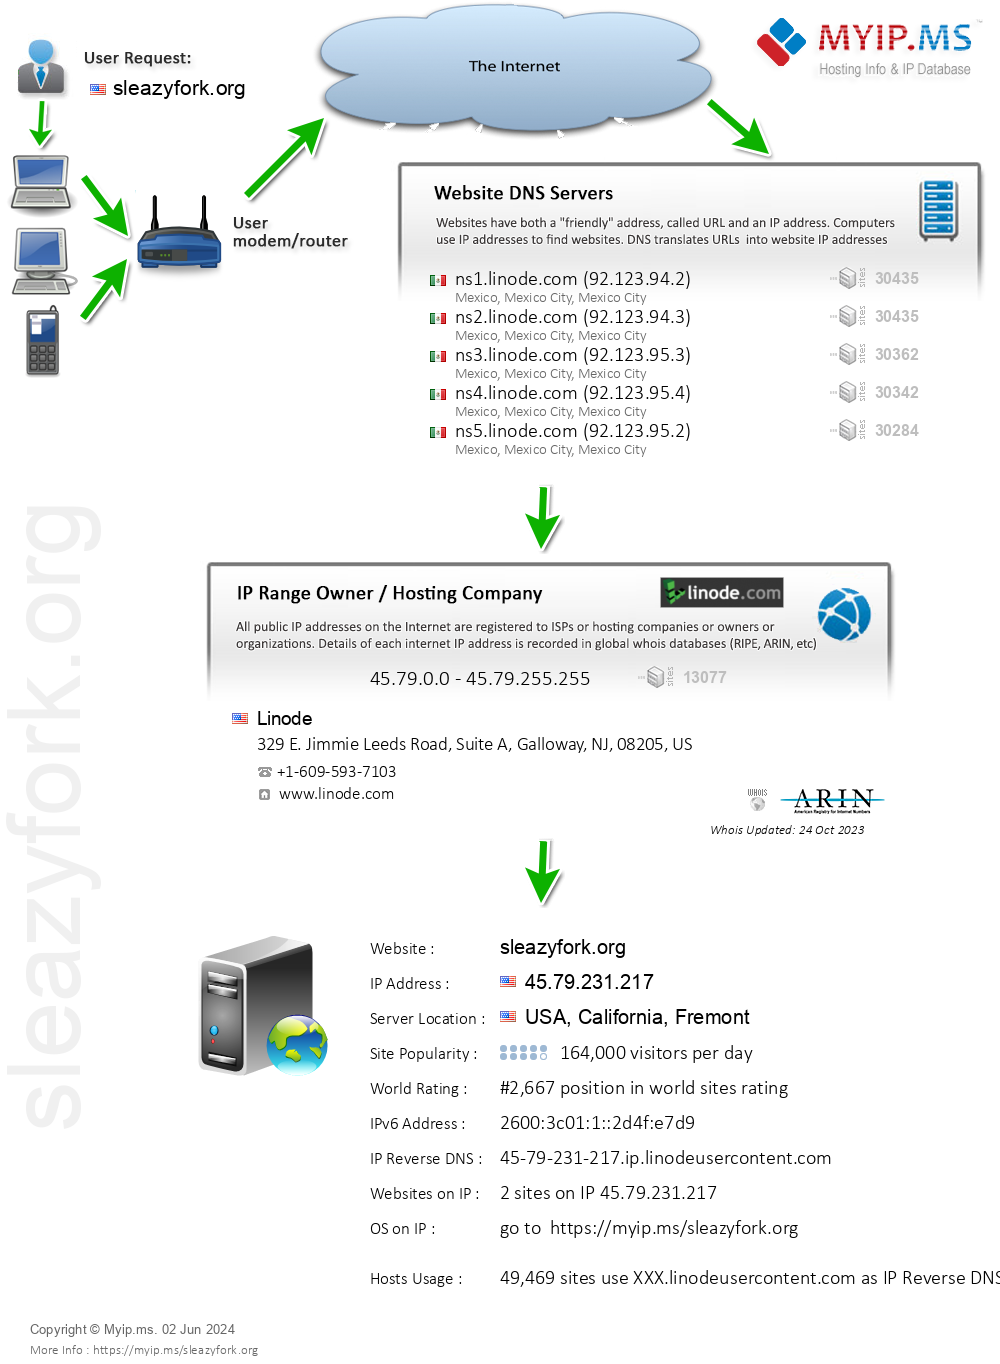 Sleazyfork.org - Website Hosting Visual IP Diagram